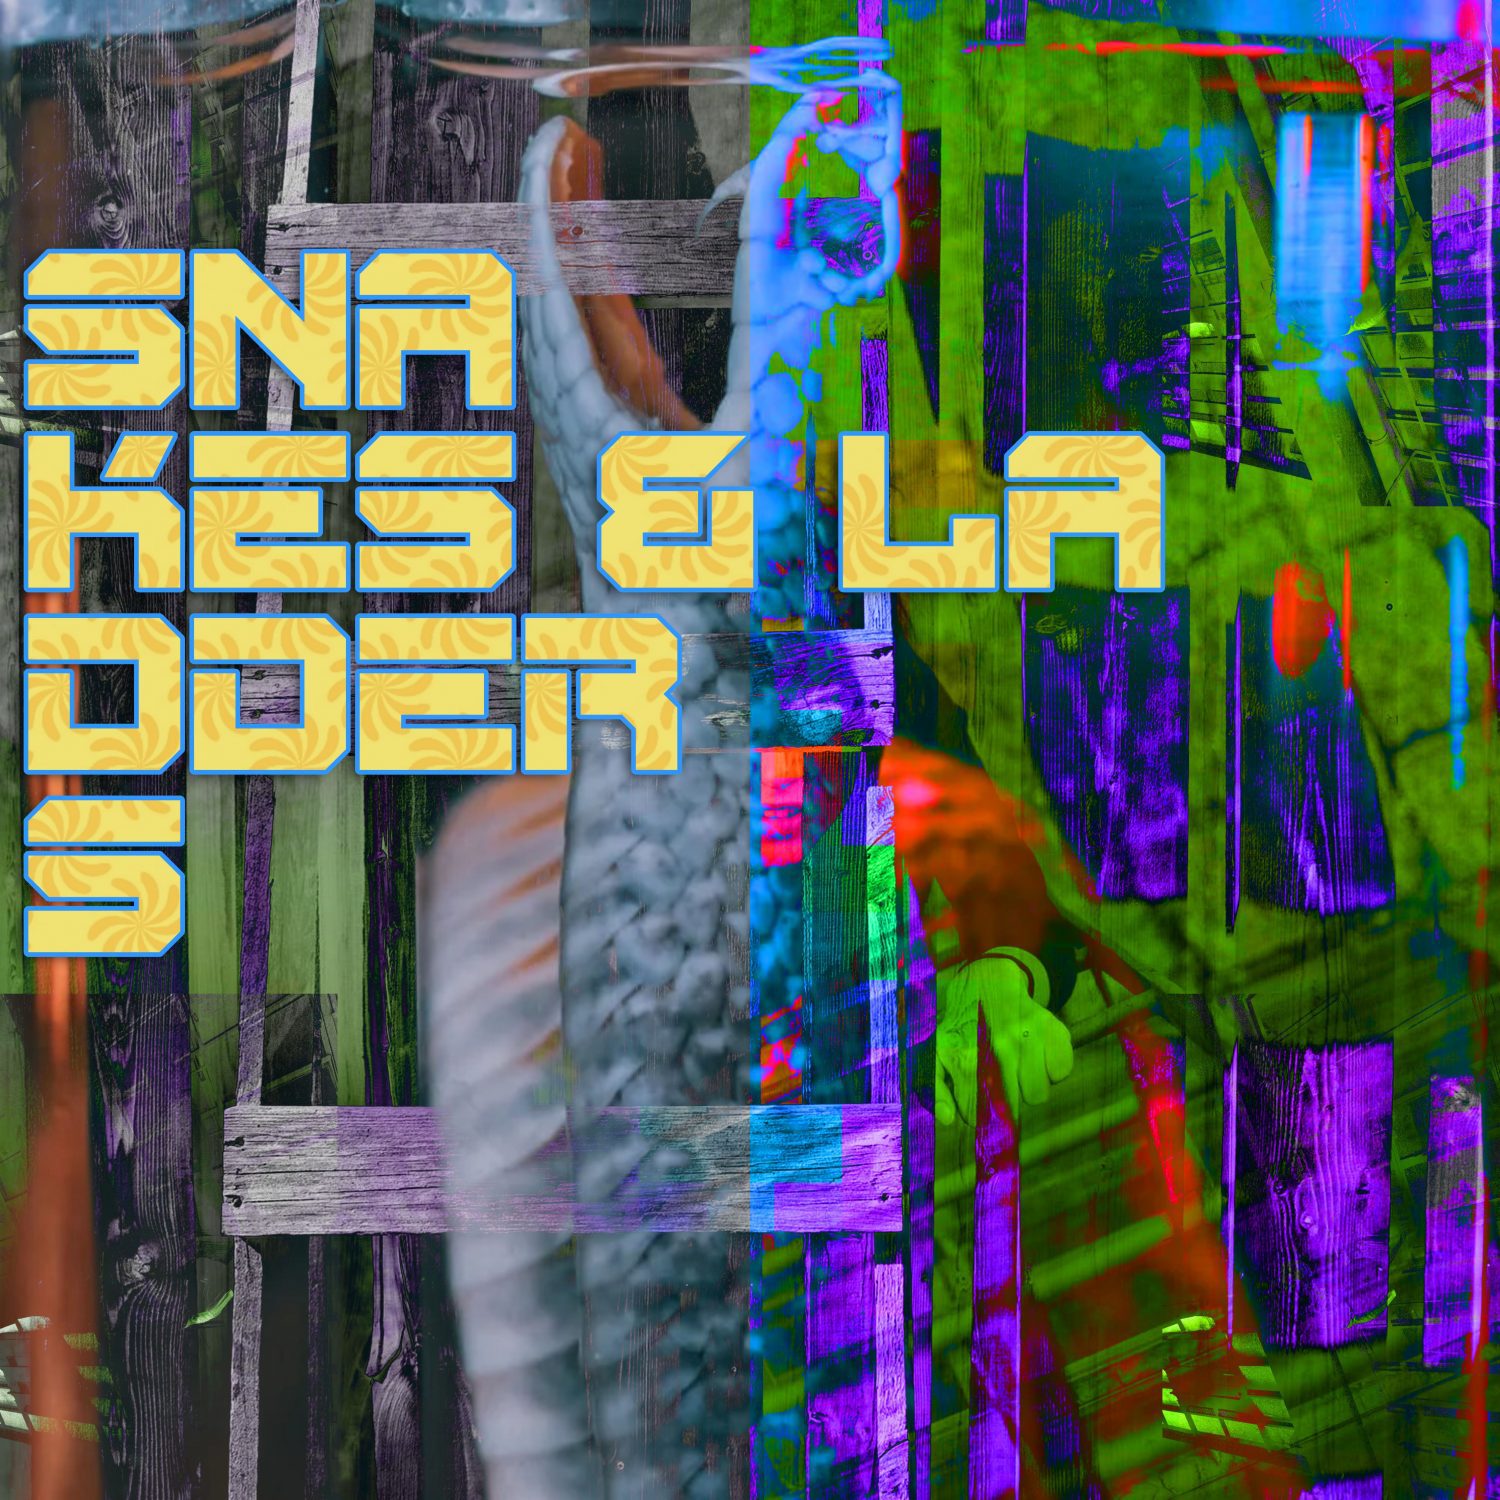 Snakes & Ladders Album Cover